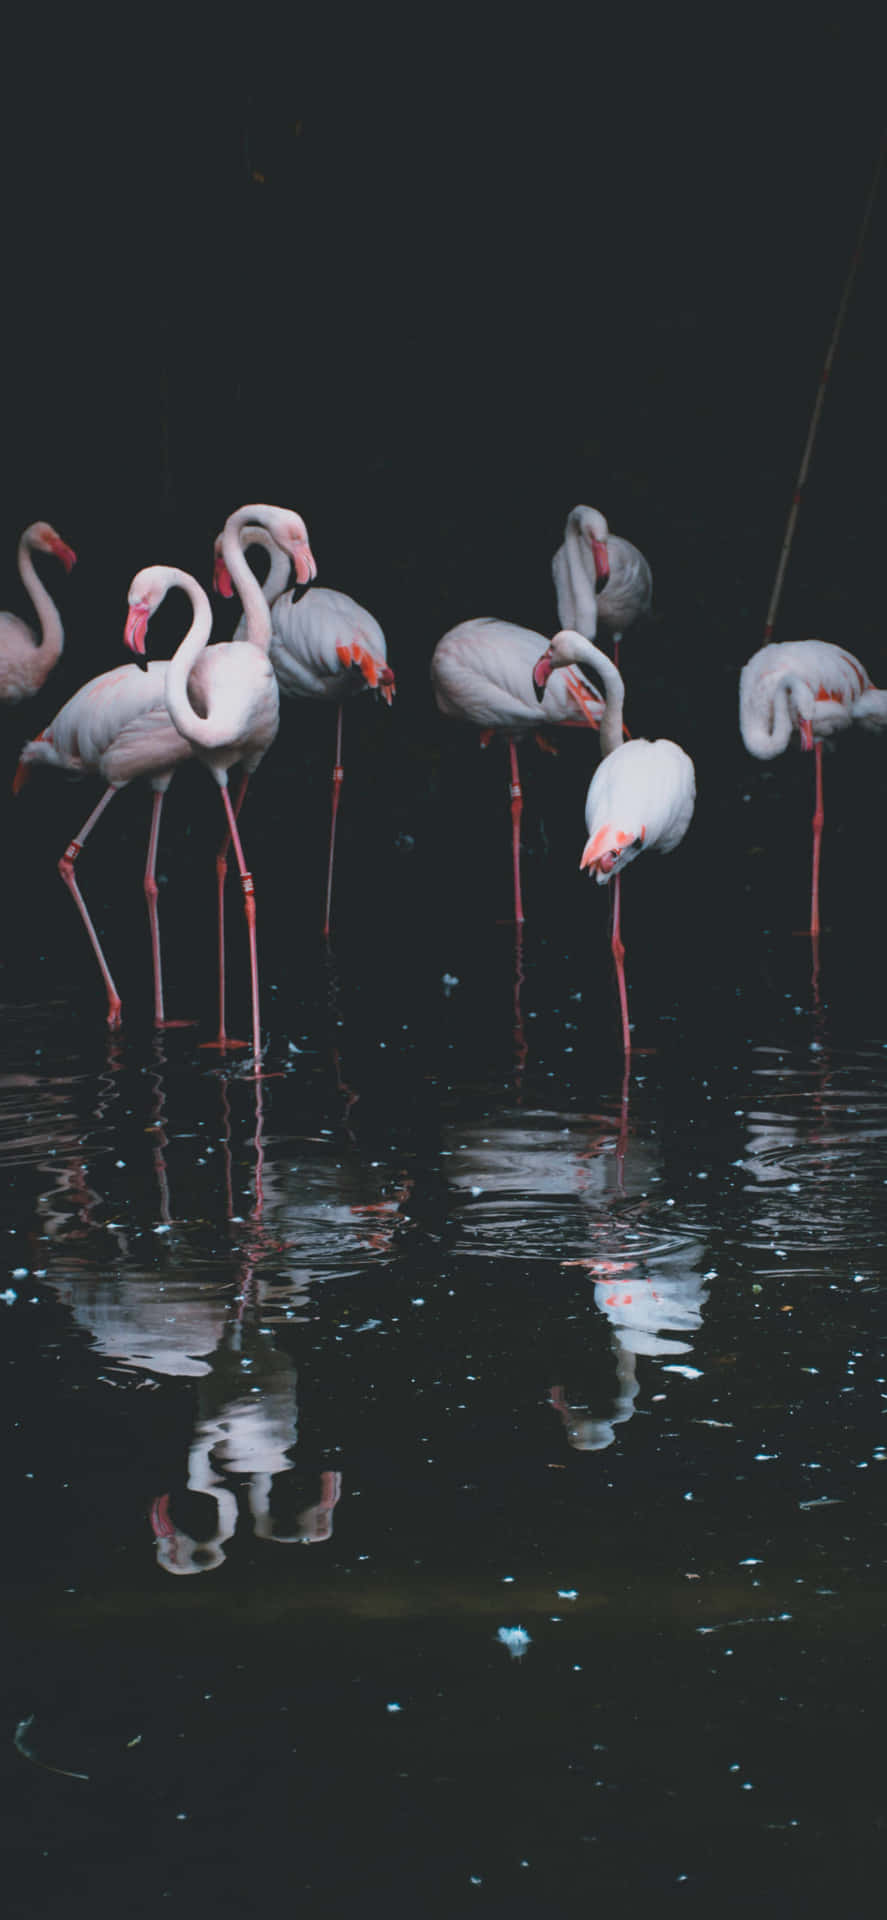 “A Flamingo Taking Flight” Wallpaper